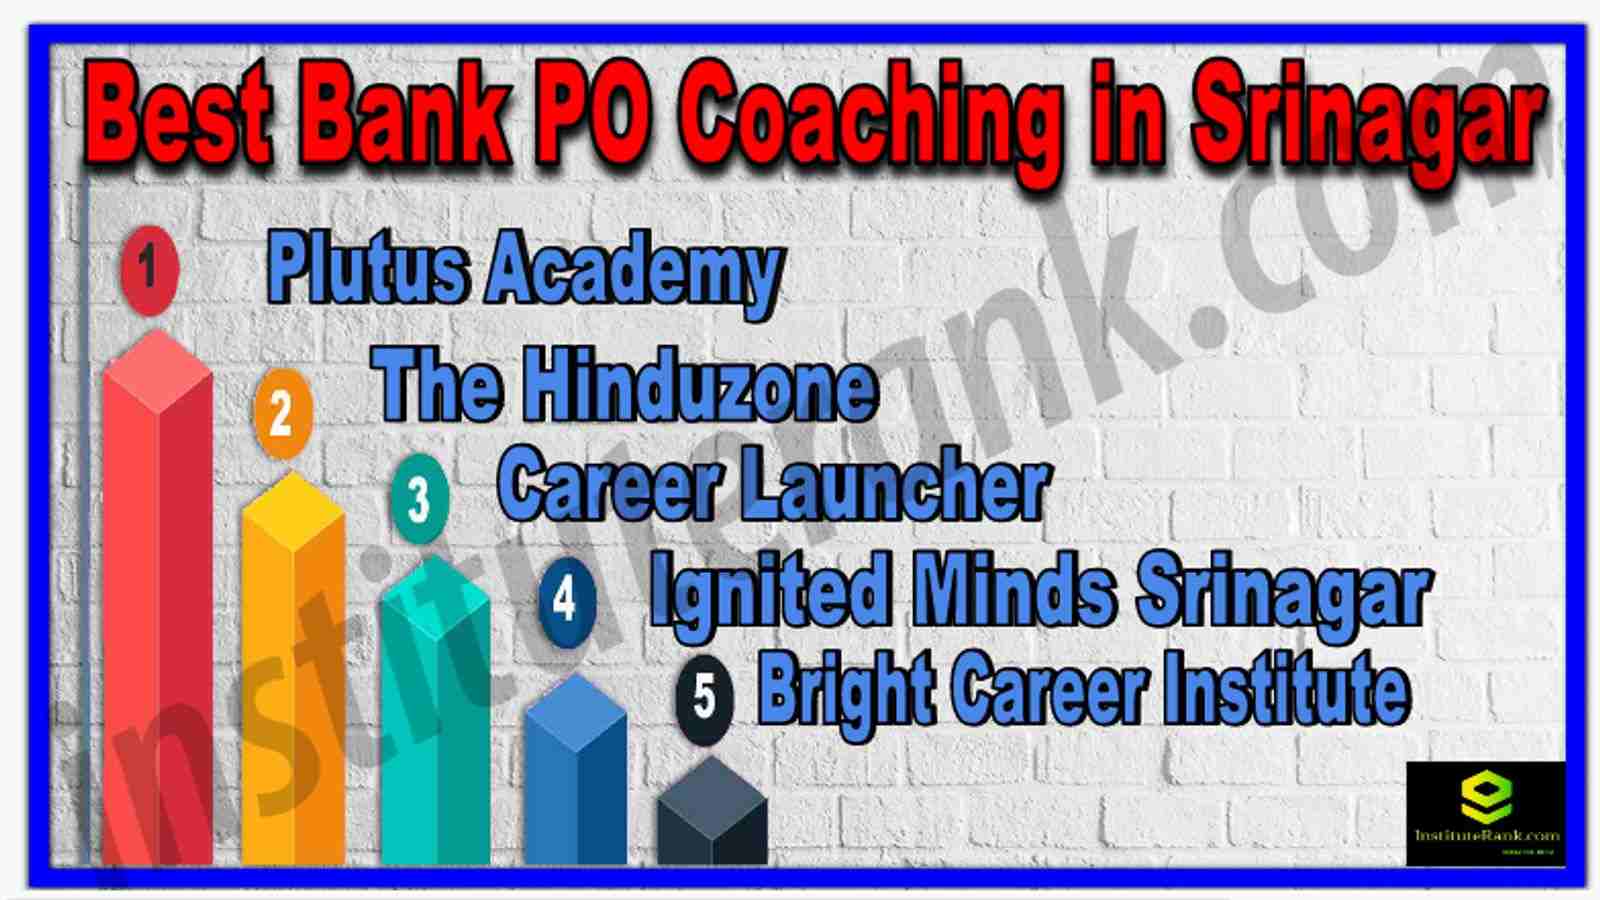 Best Bank PO Coaching in Srinagar